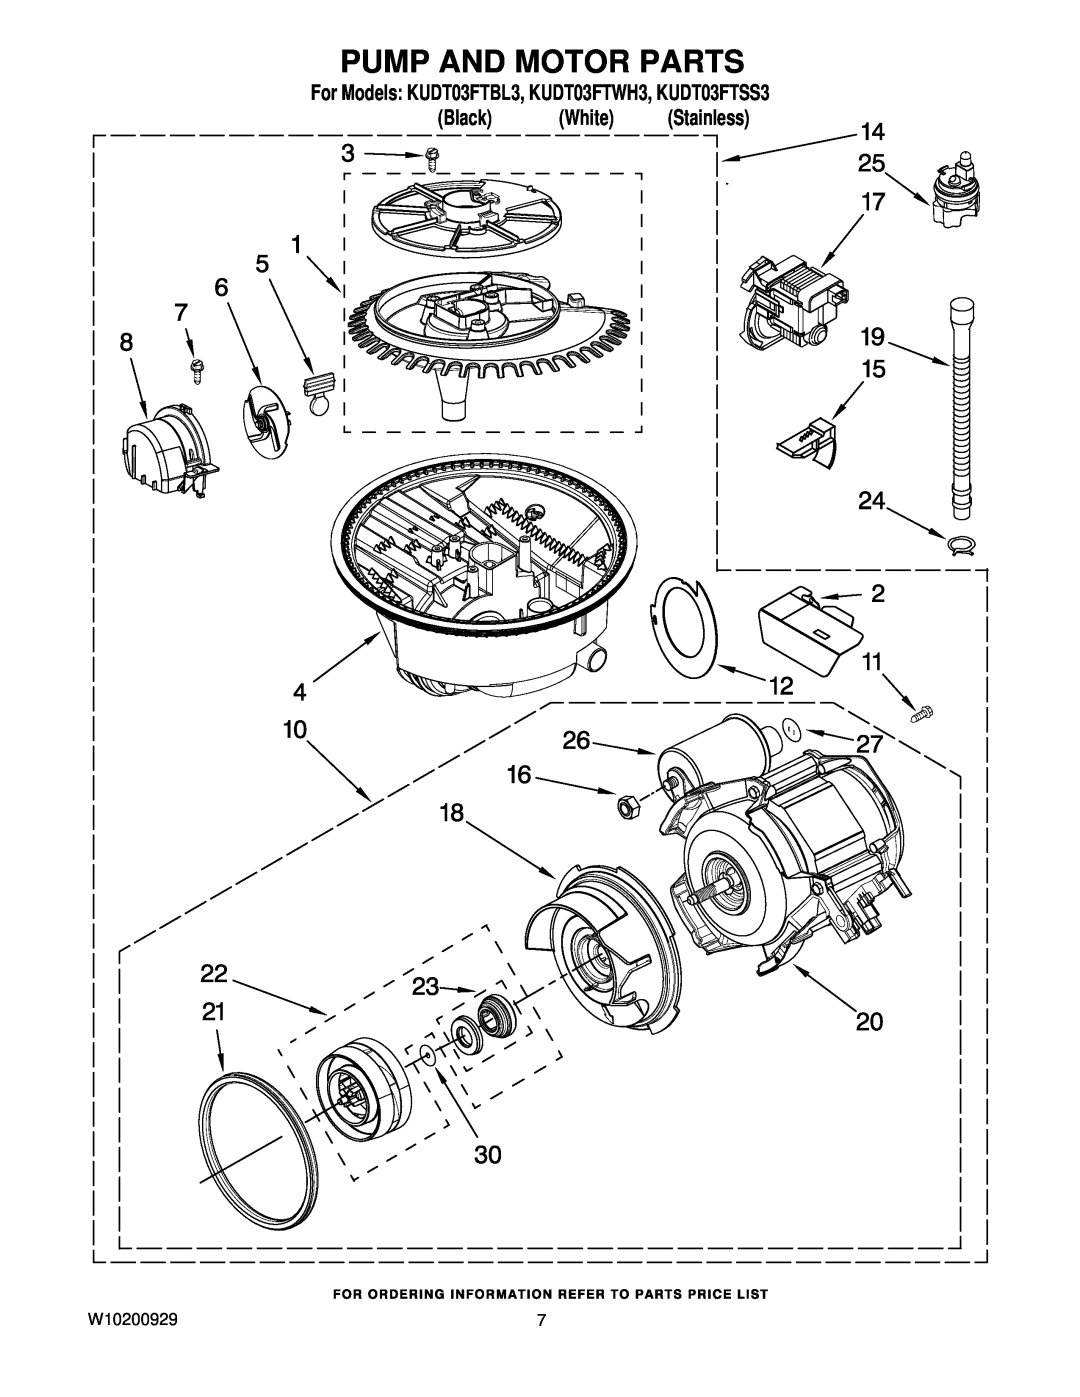 KitchenAid manual Pump And Motor Parts, For Models KUDT03FTBL3, KUDT03FTWH3, KUDT03FTSS3, Black White Stainless 